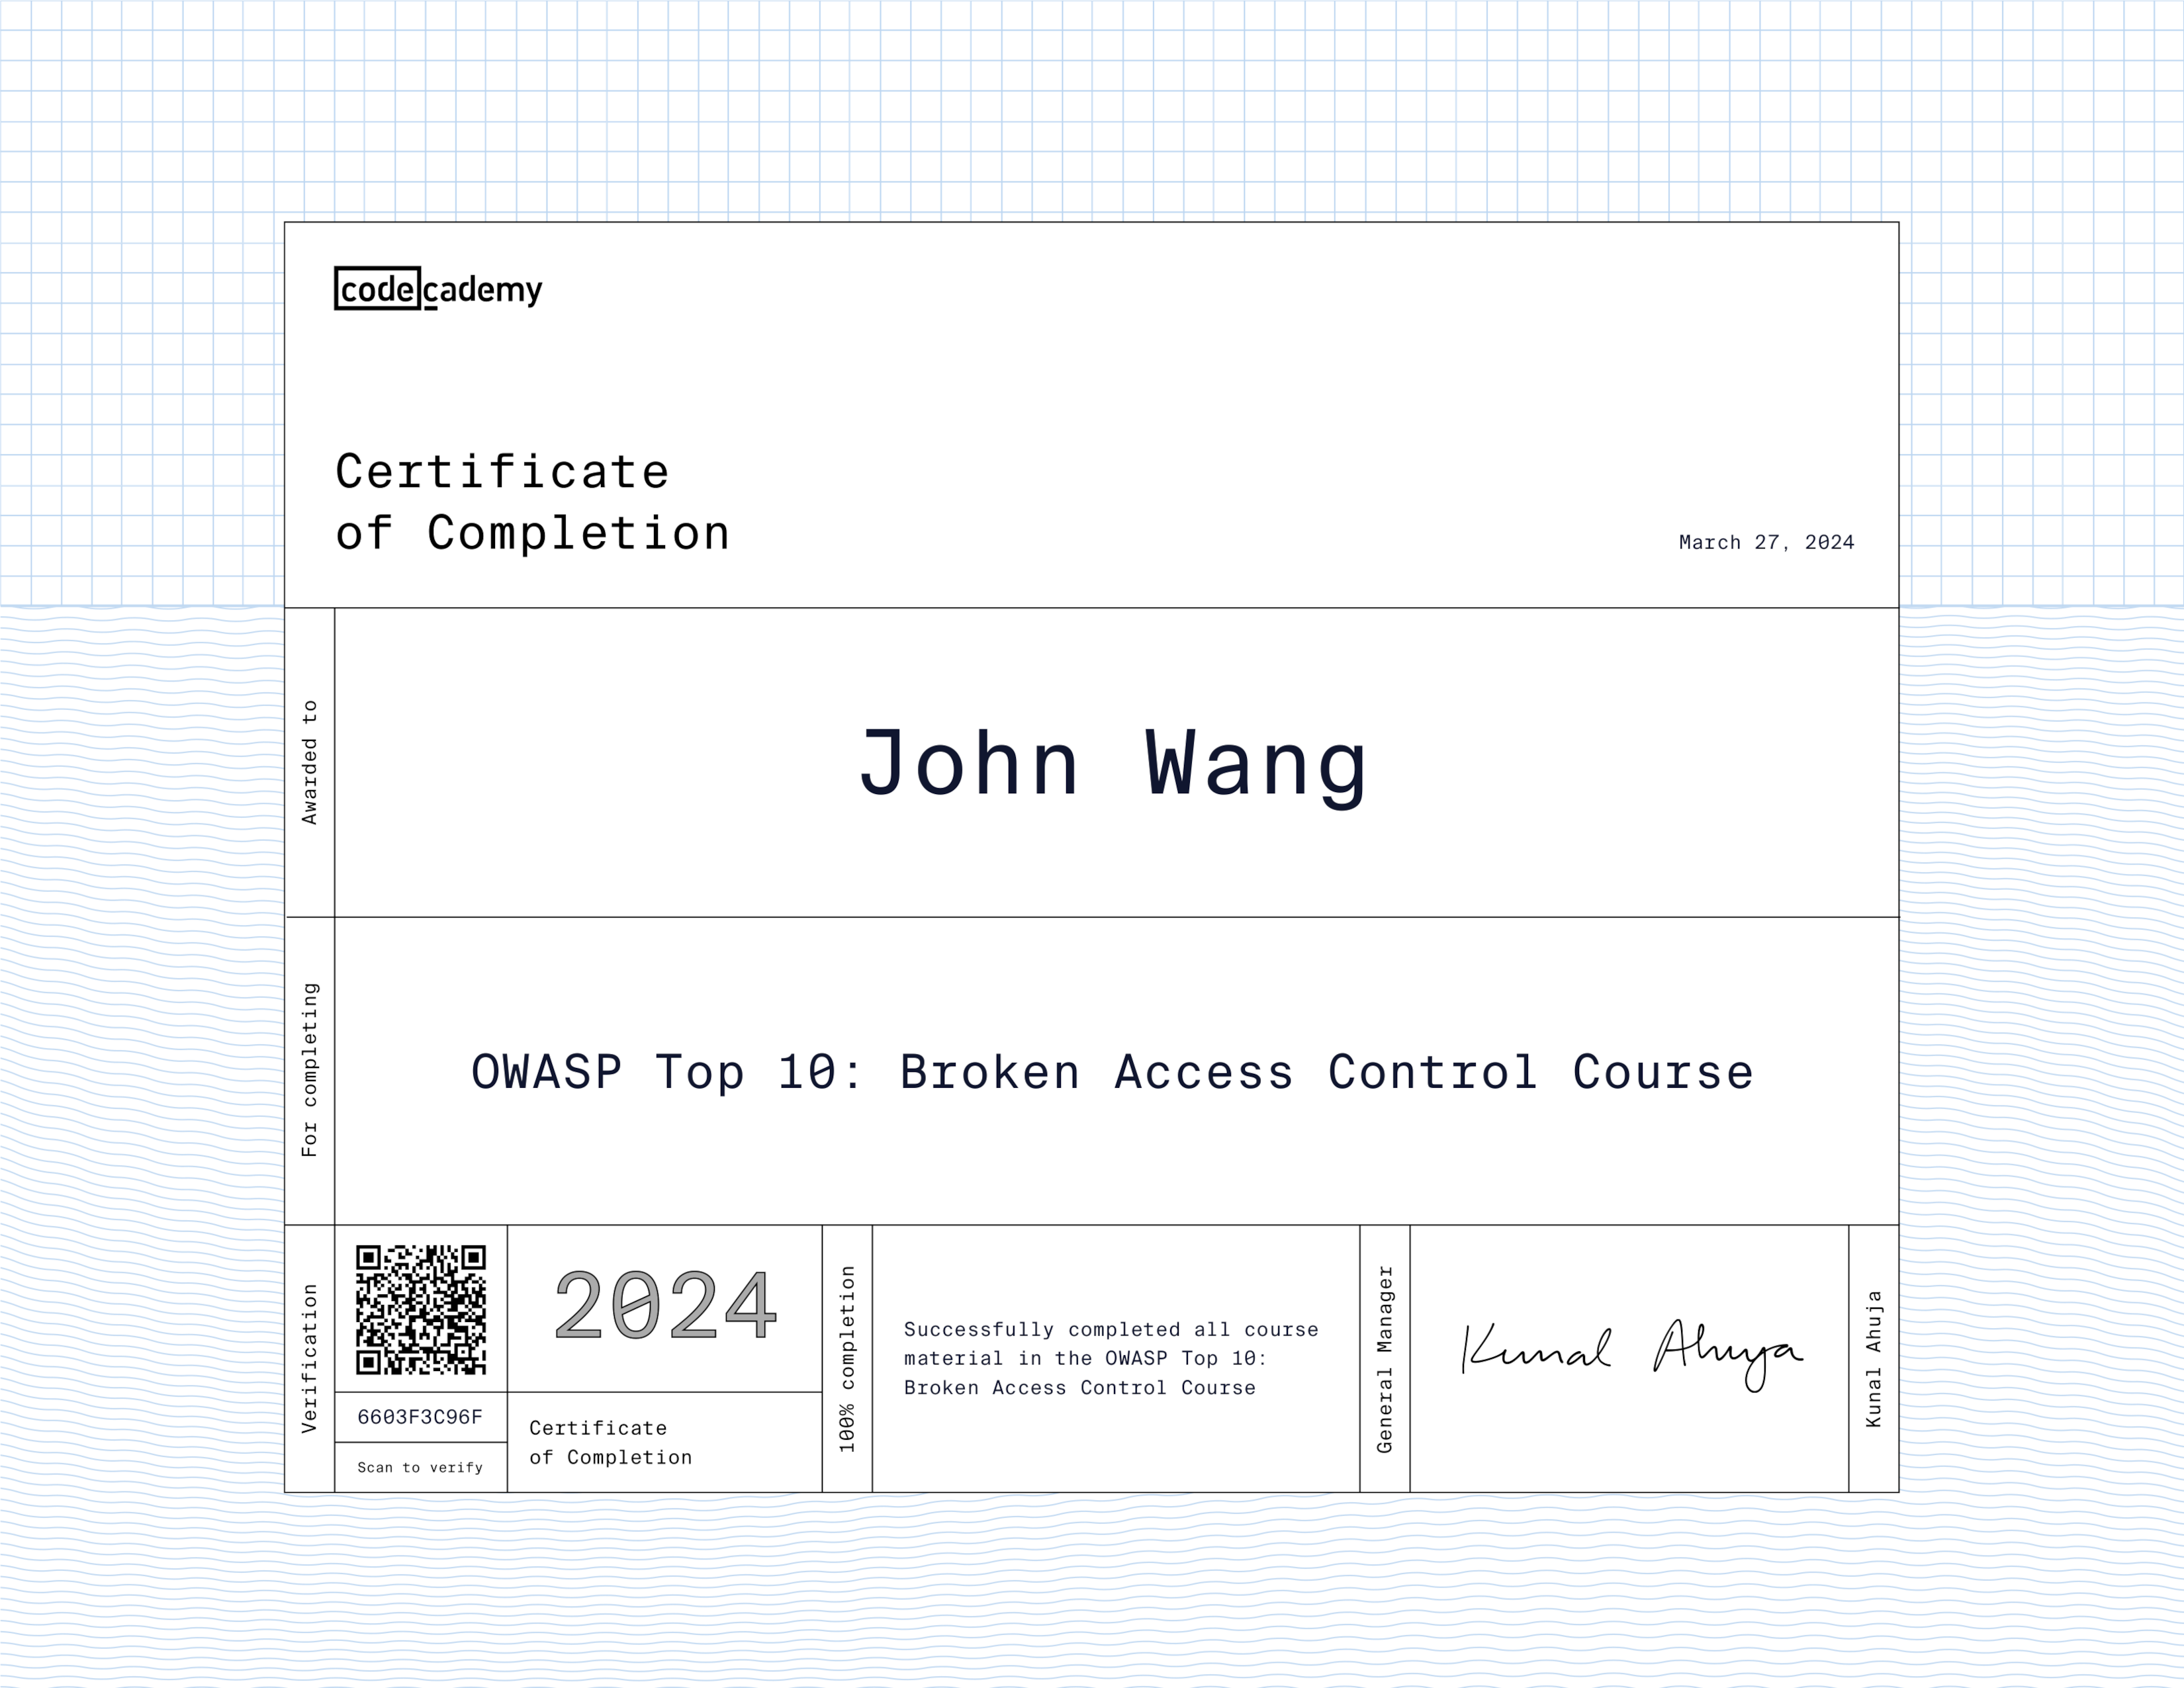 John's OWASP Top 10: Broken Access Control from Codecademy